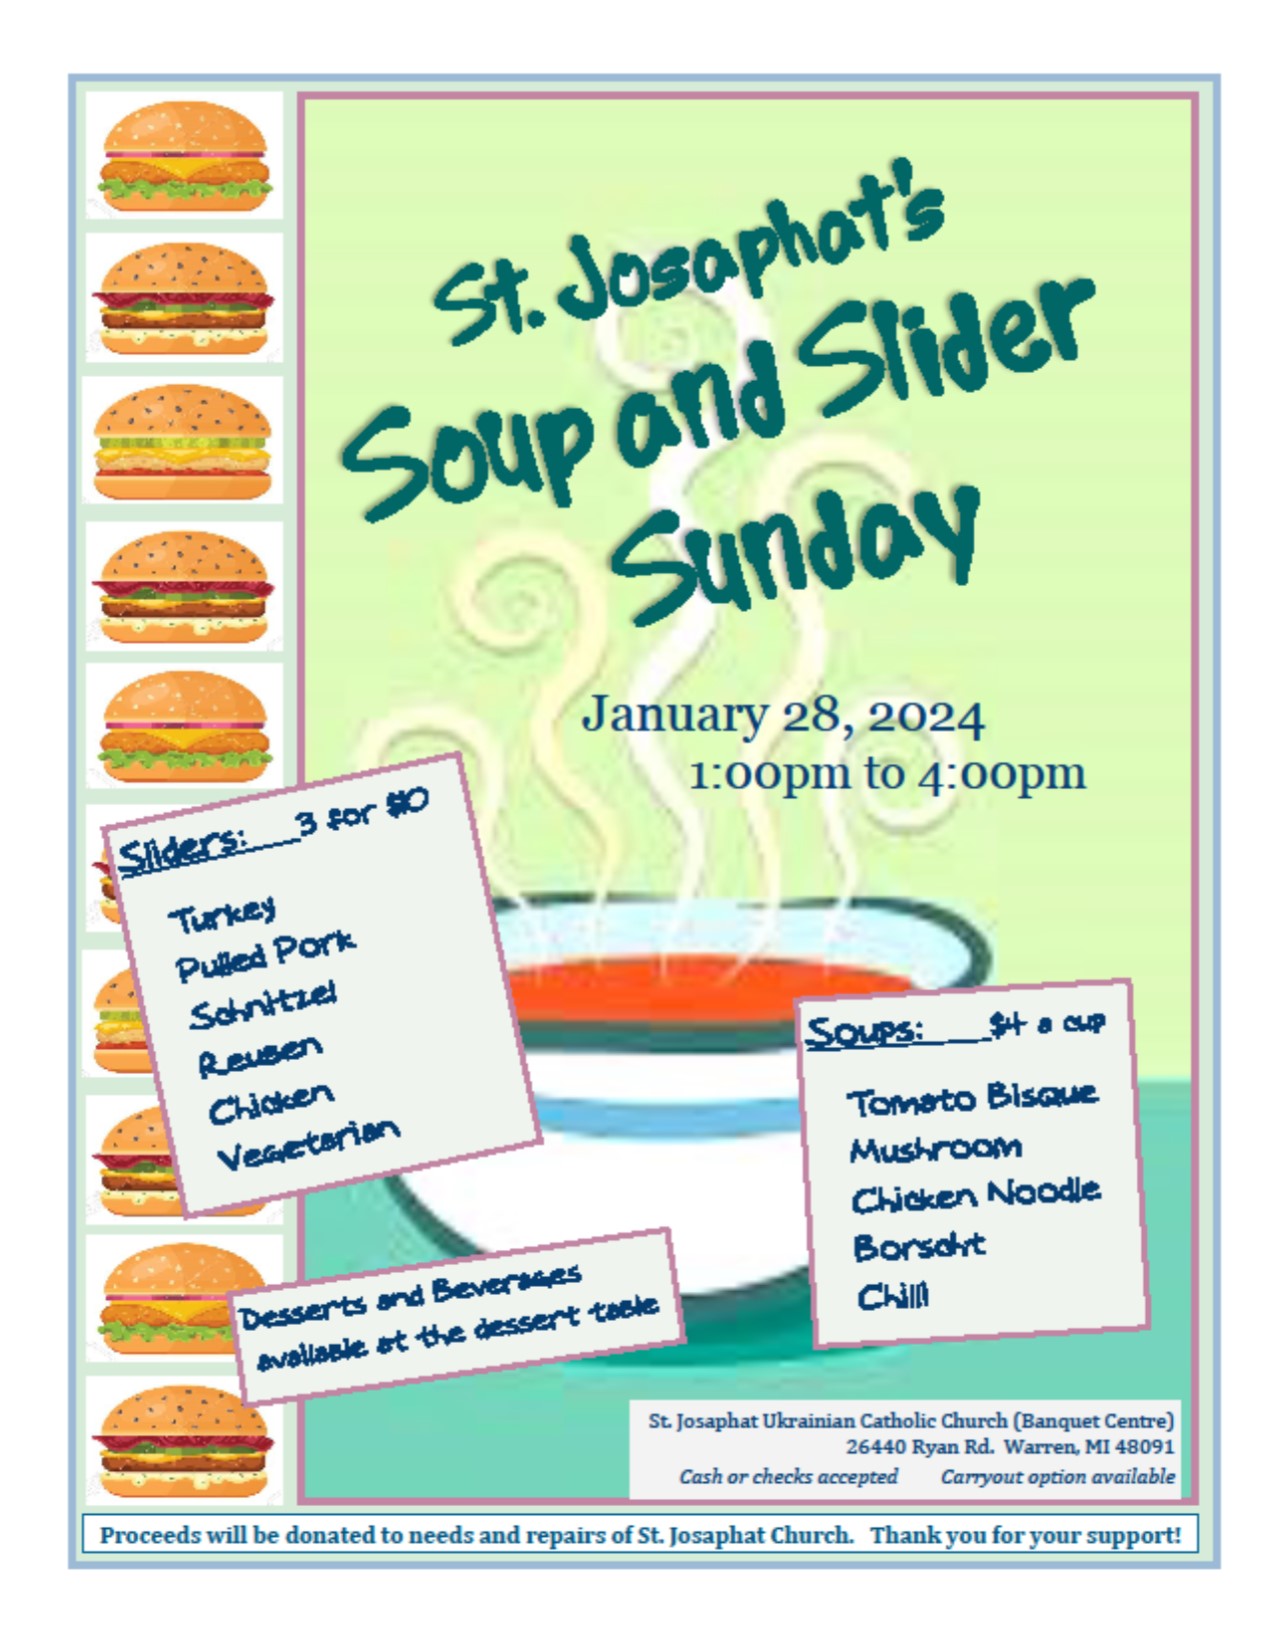 St. Josaphat's Soup and Slider Sunday